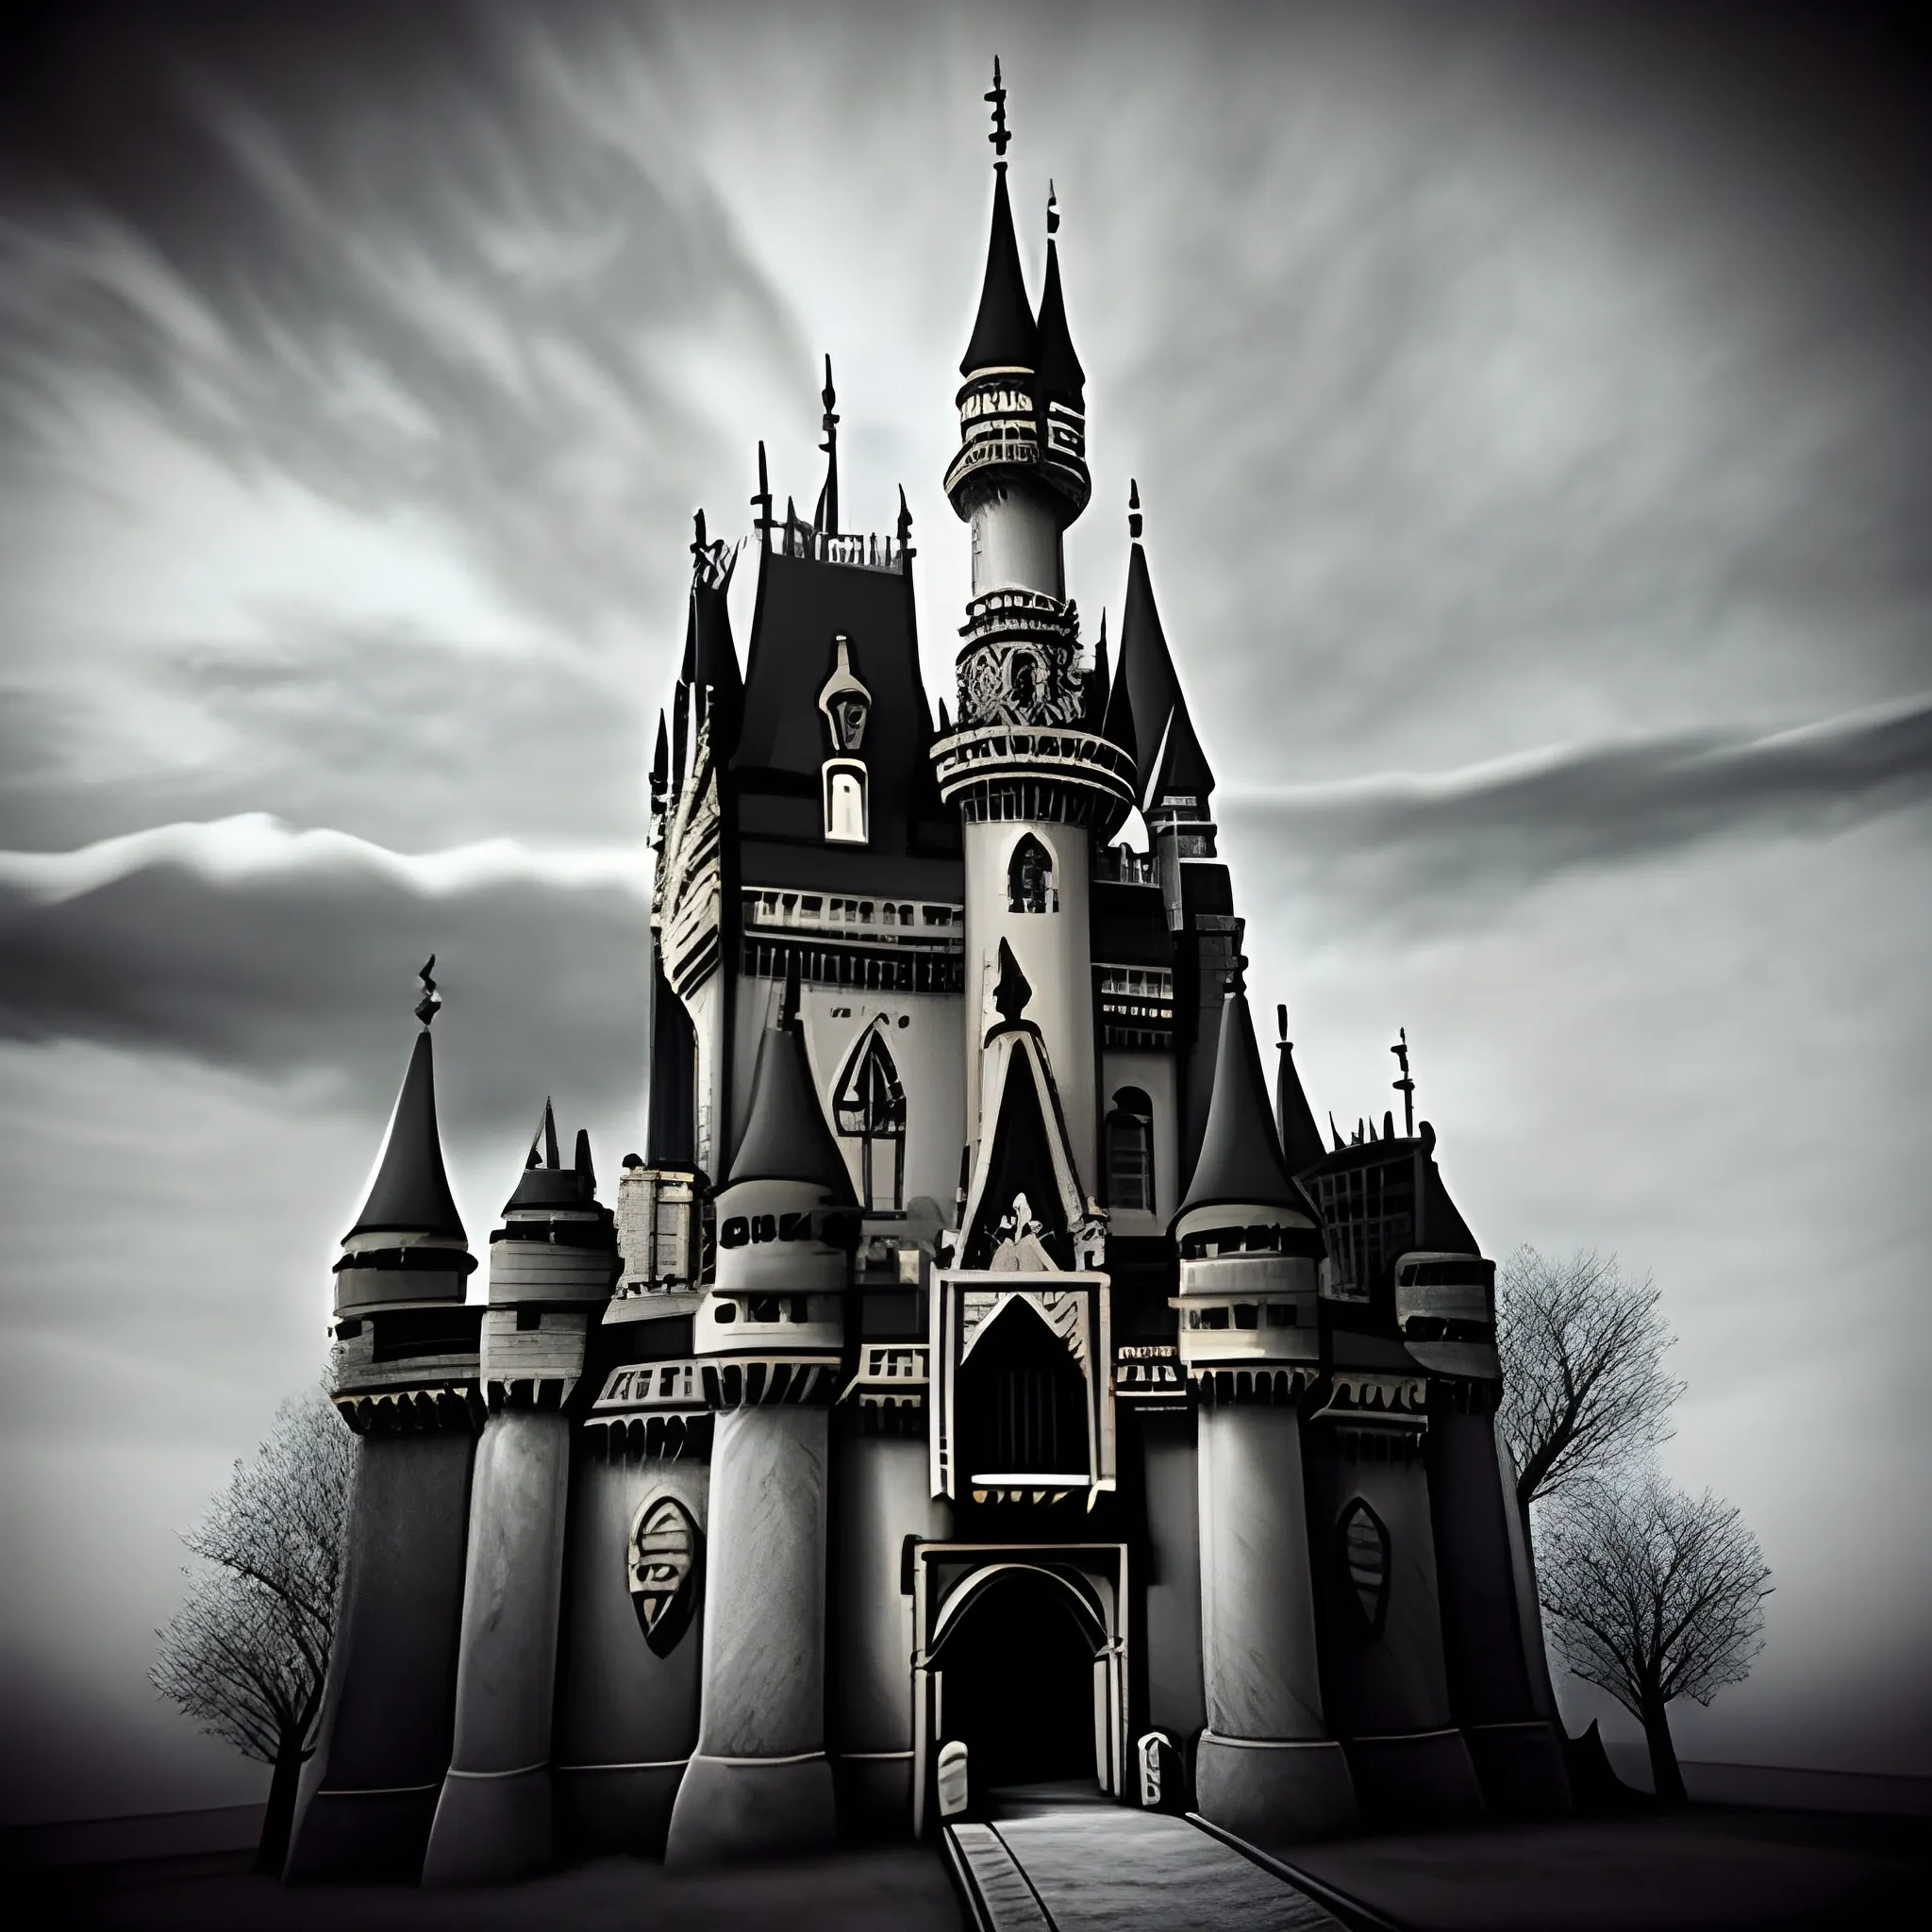 castle gothic haunted
